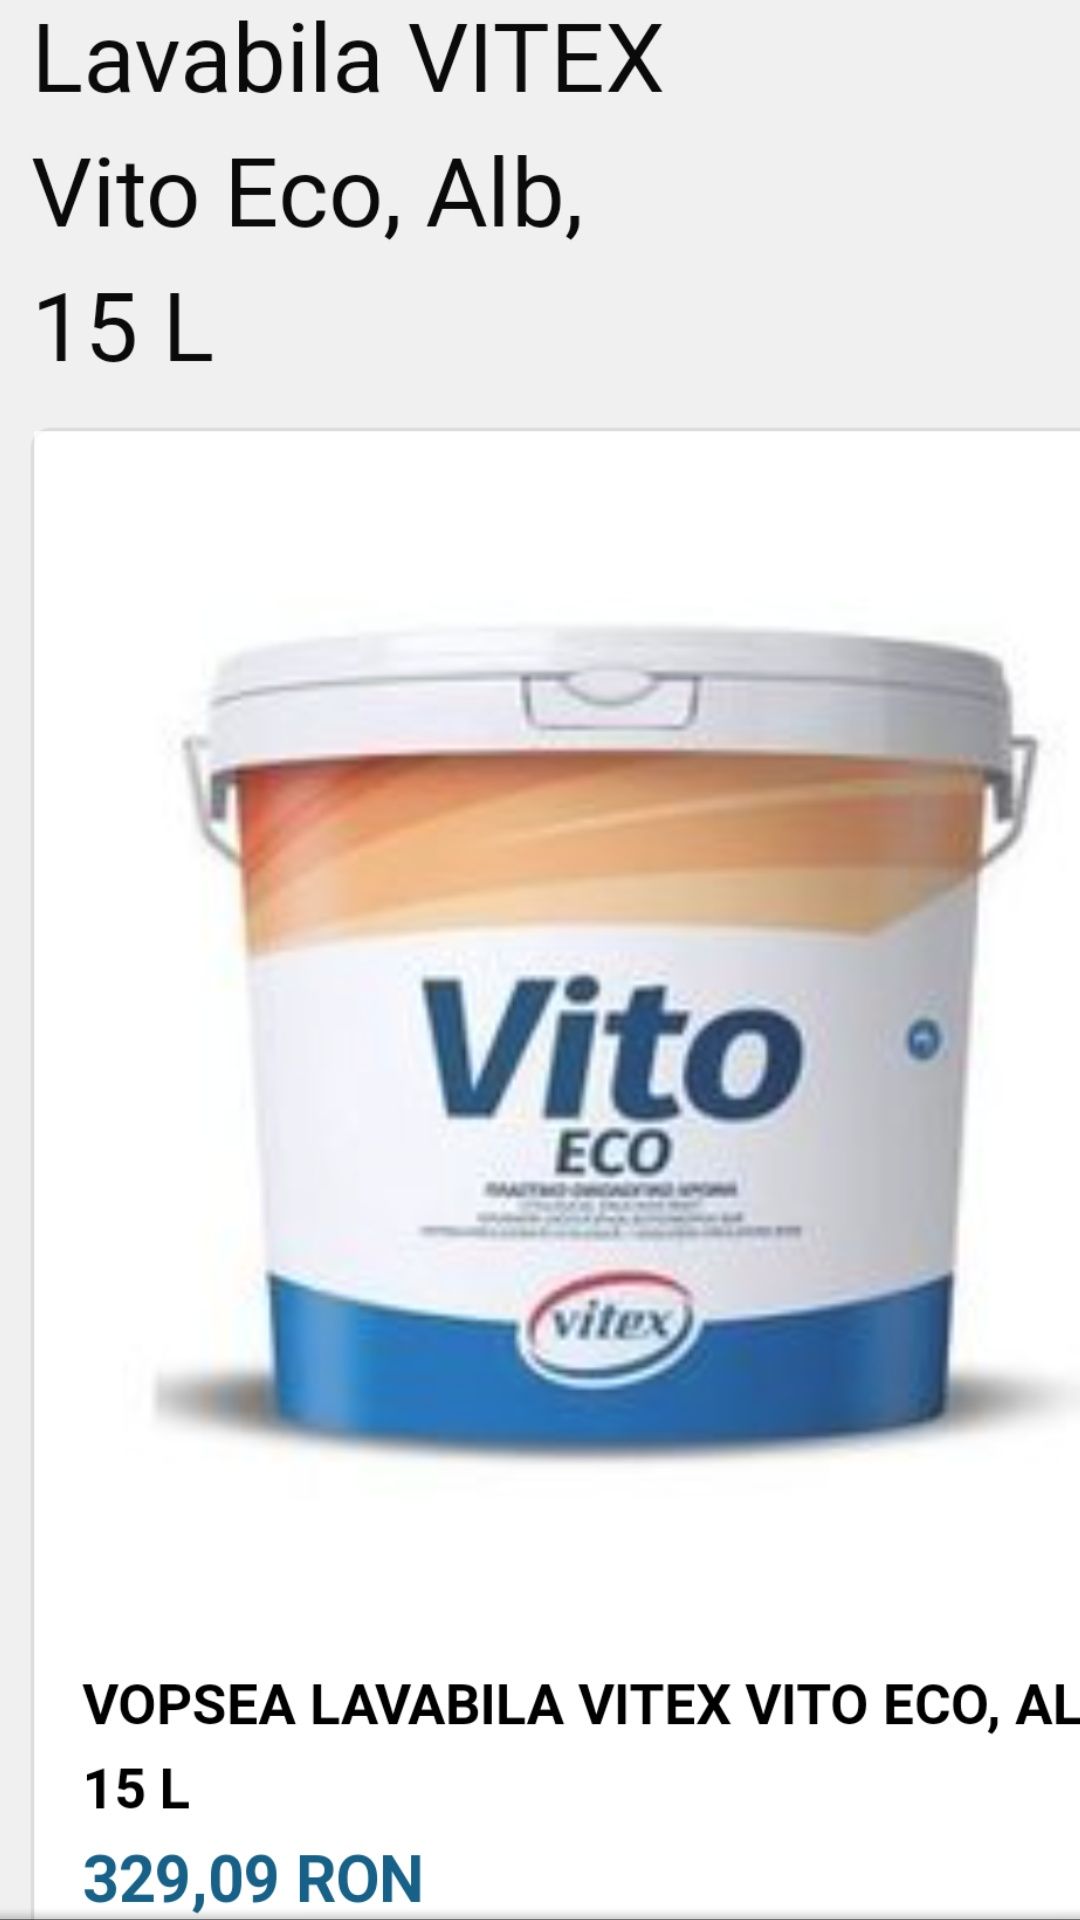 Lavabilă VITEX VITO ECO alb 15 kg.